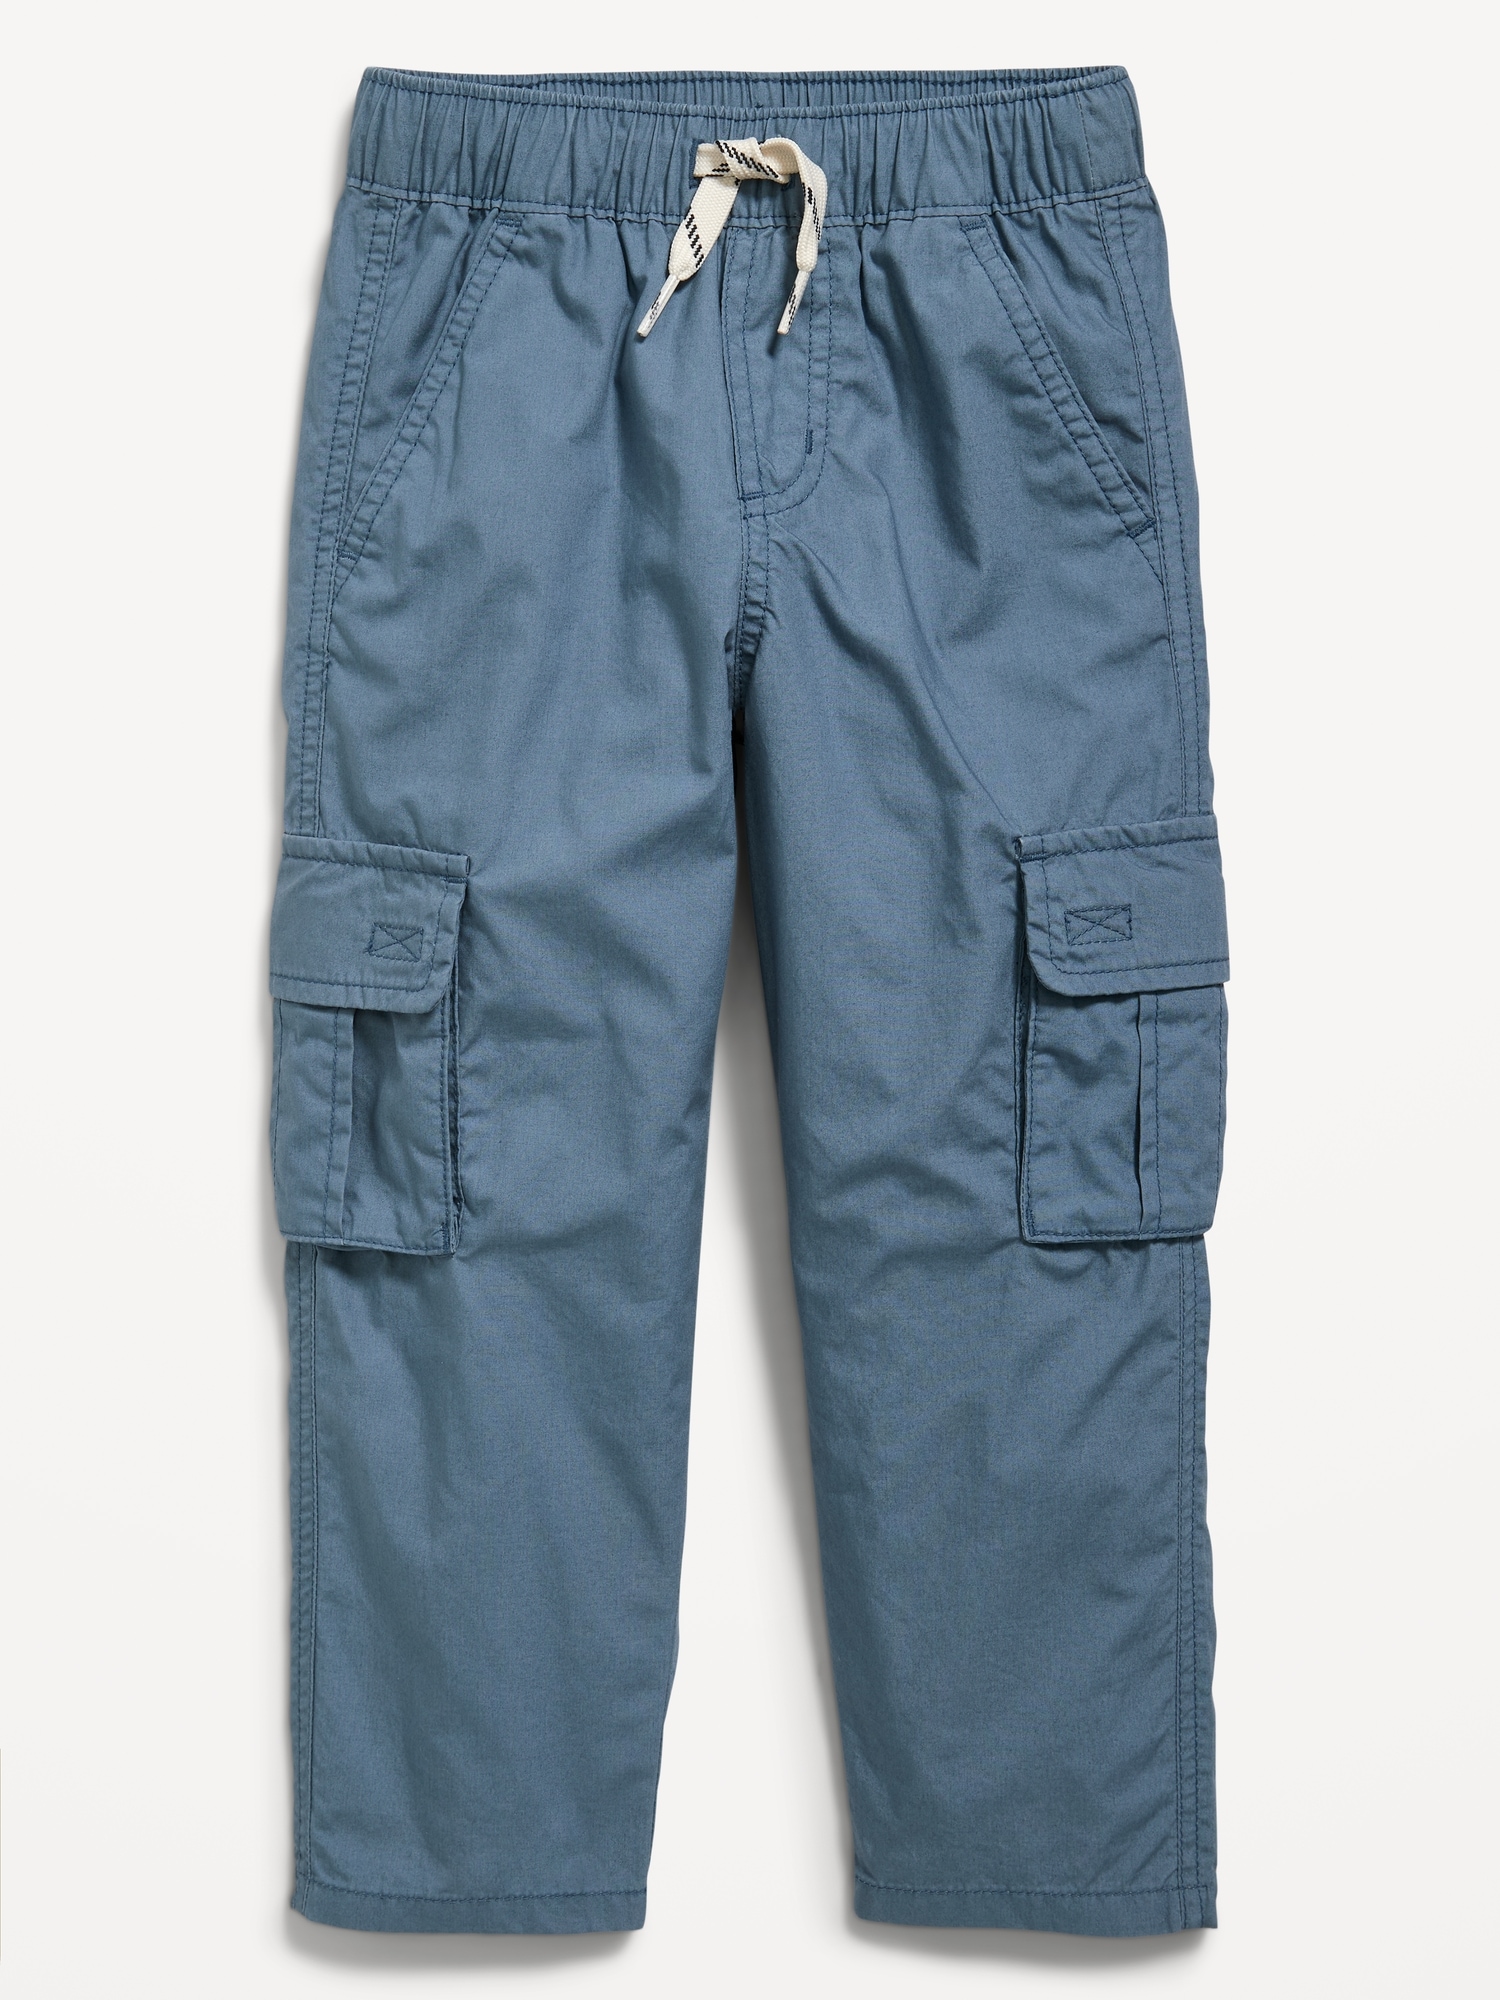 Boys Cargo Pants Clothing, Long Cargo Pants Boys